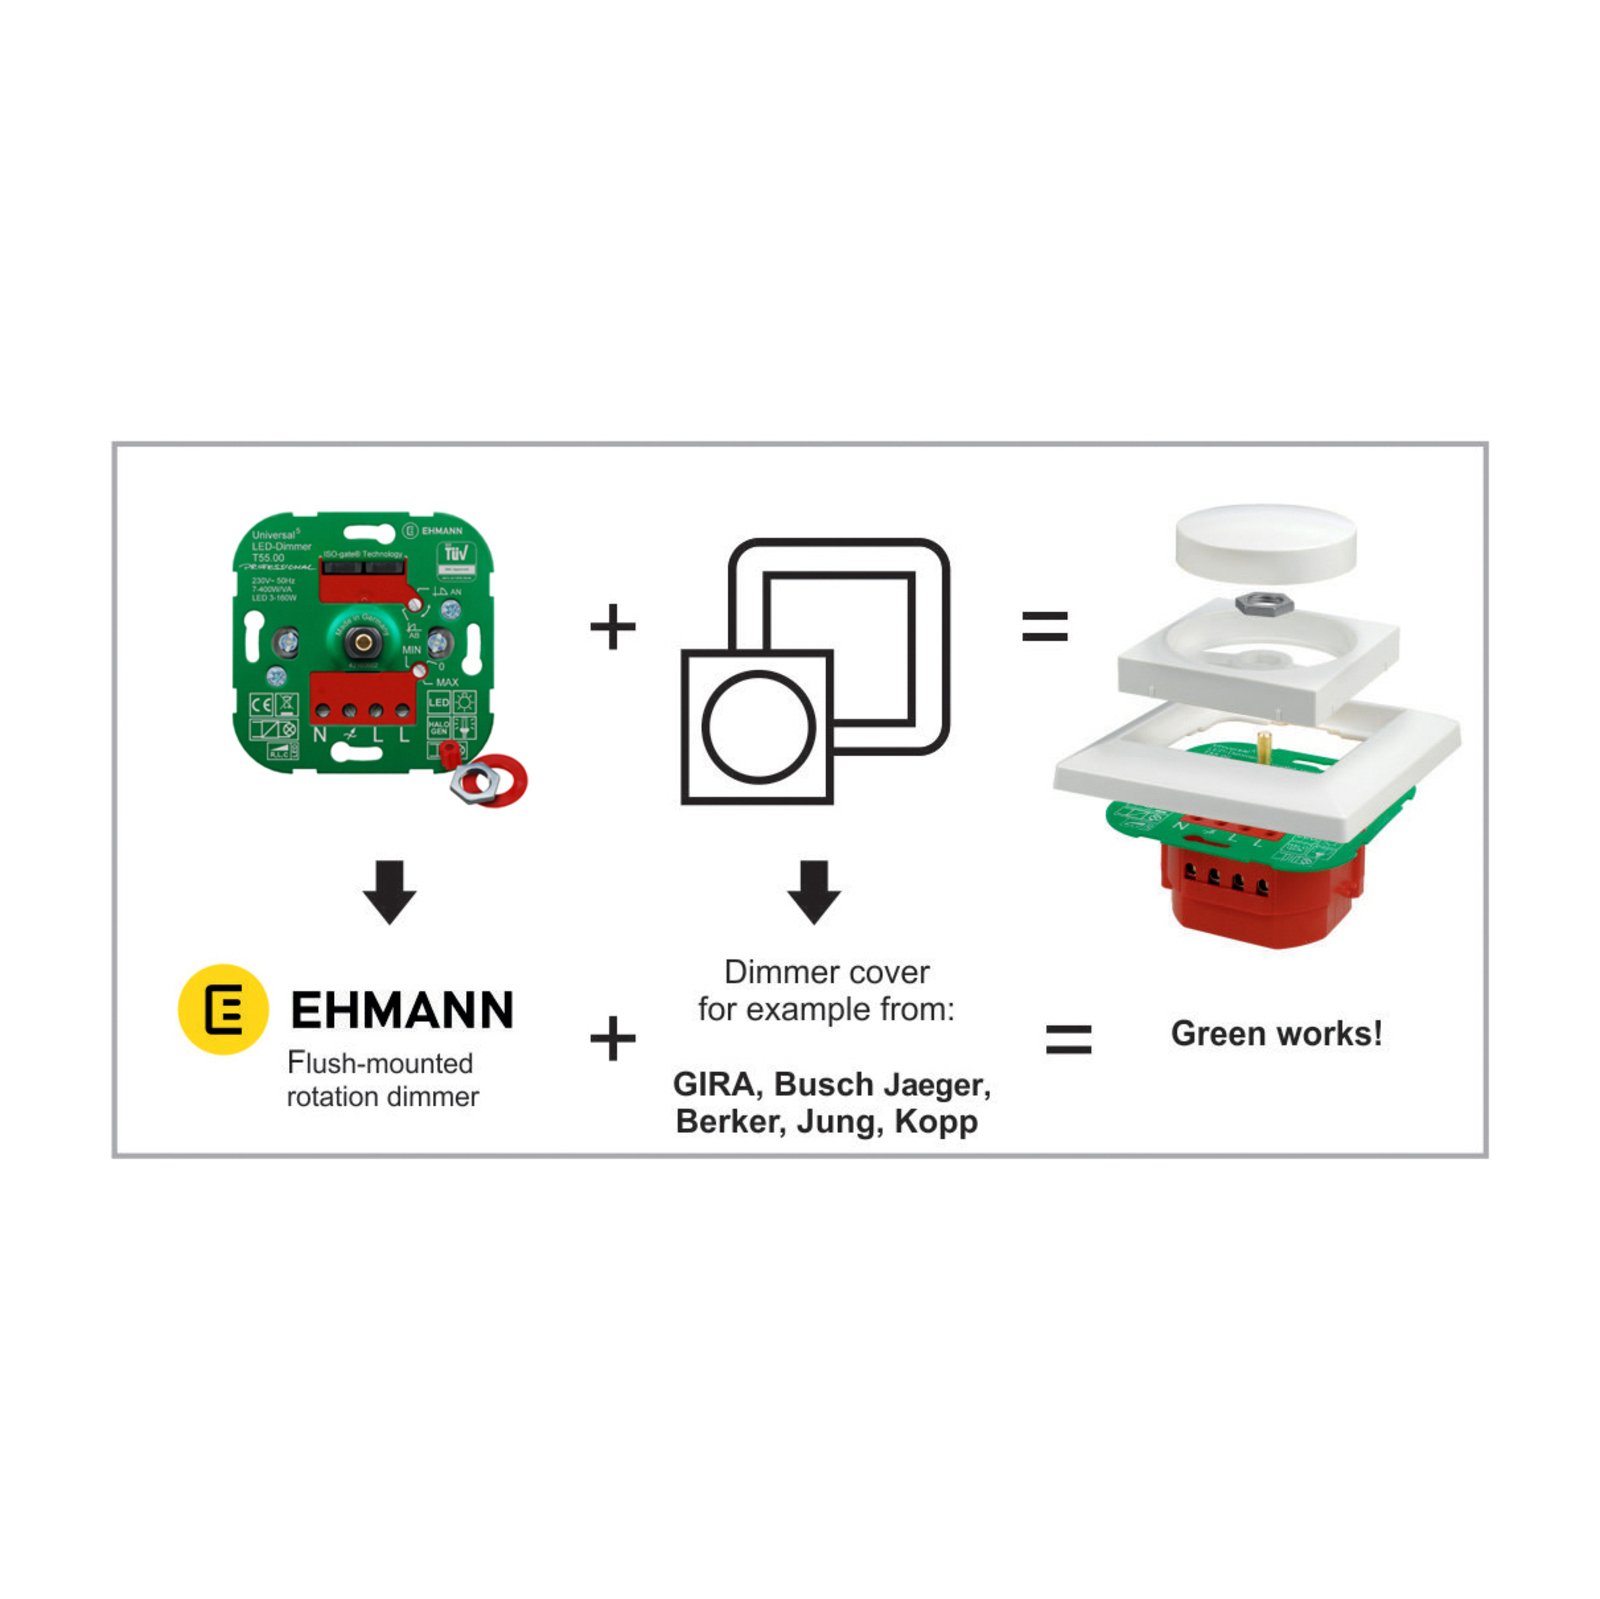 EHMANN T46 LED με ρύθμιση φάσης ελέγχου ακμής, 3-50W